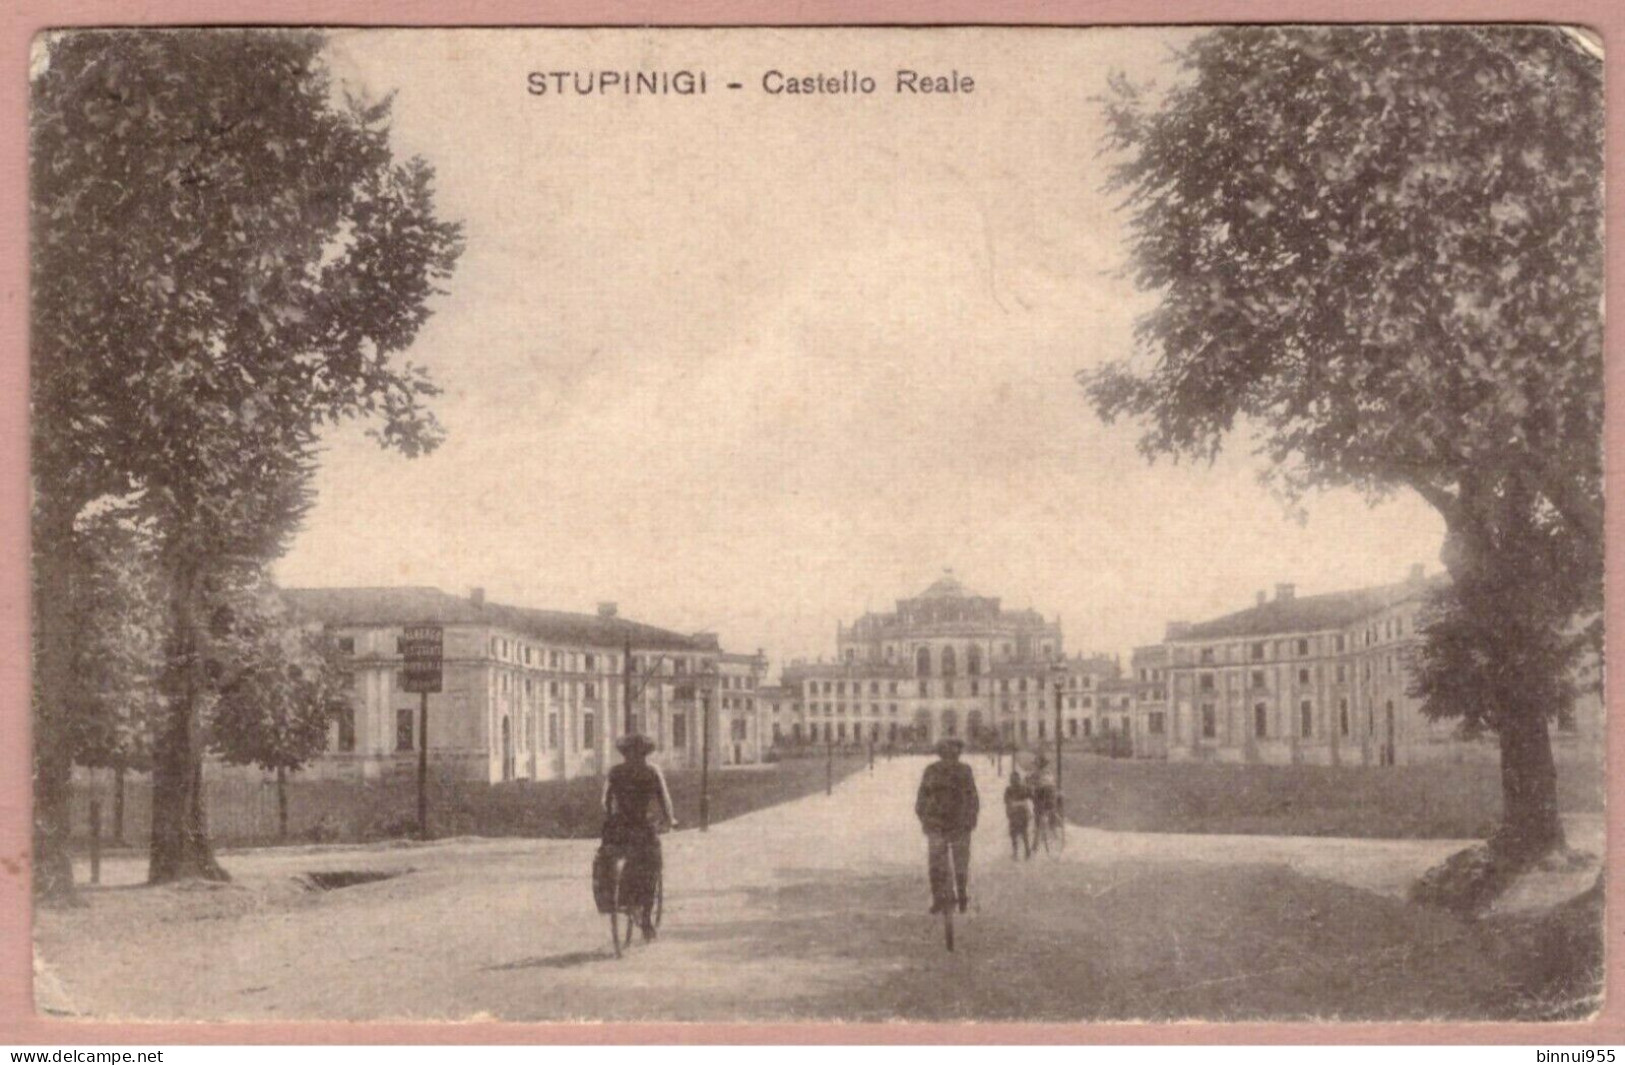 Cartolina Stupinigi Castello Reale - Viaggiata 1917 - Panoramic Views